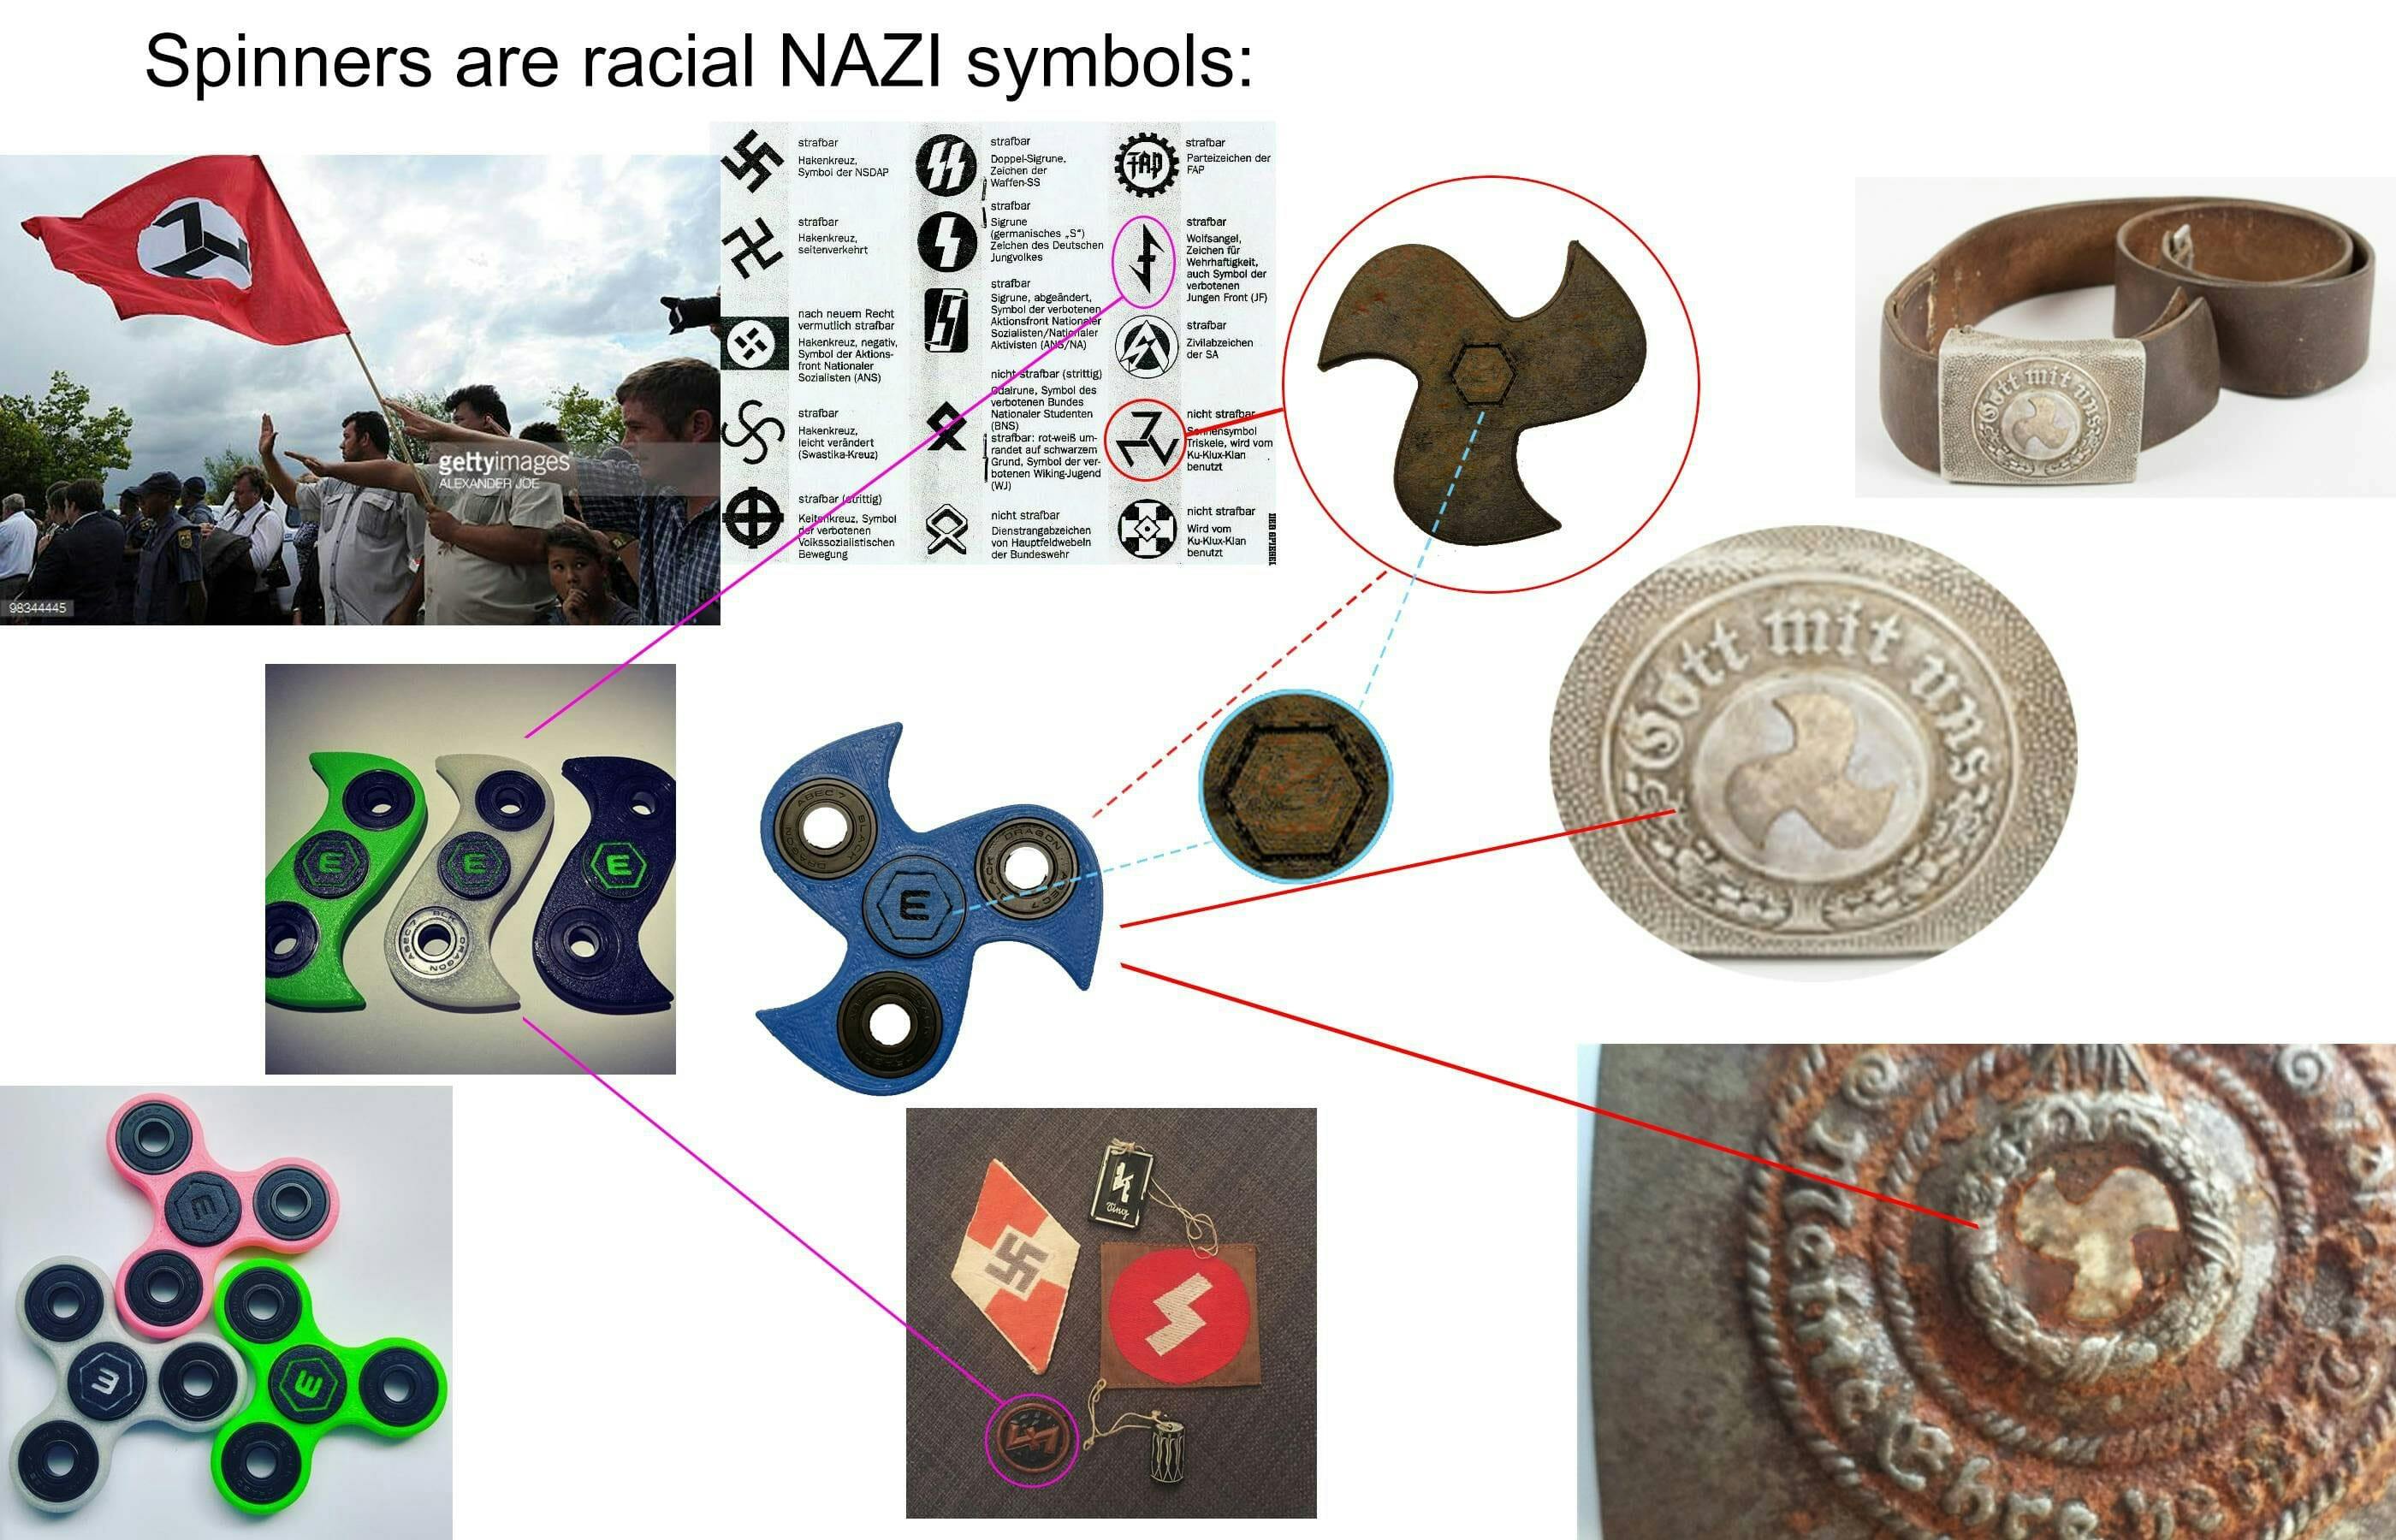 fidget spinner swastika memes